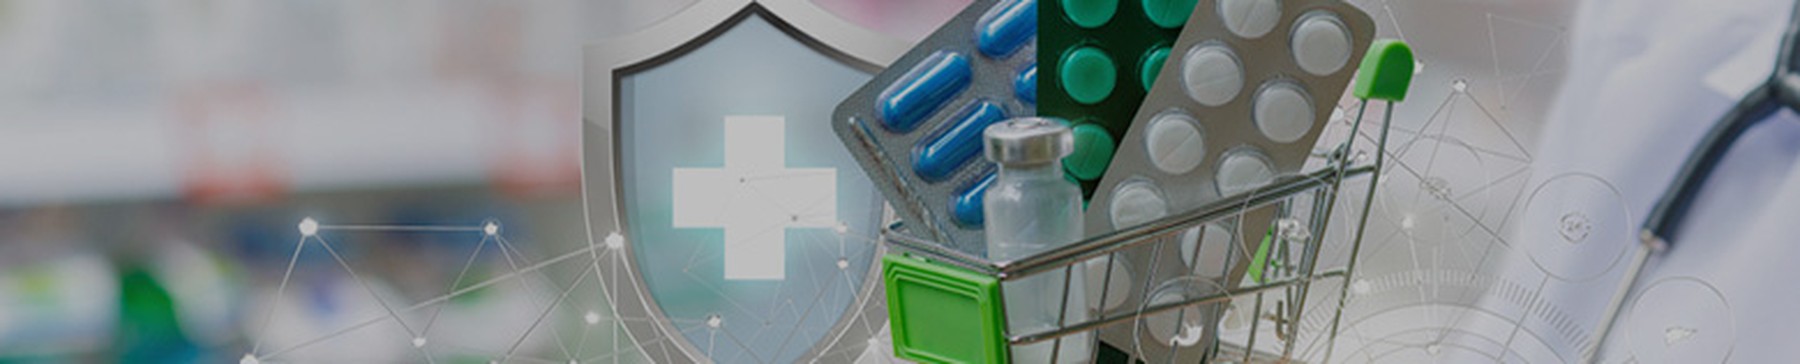 HDFC Offer: Get 22% OFF on medicines!